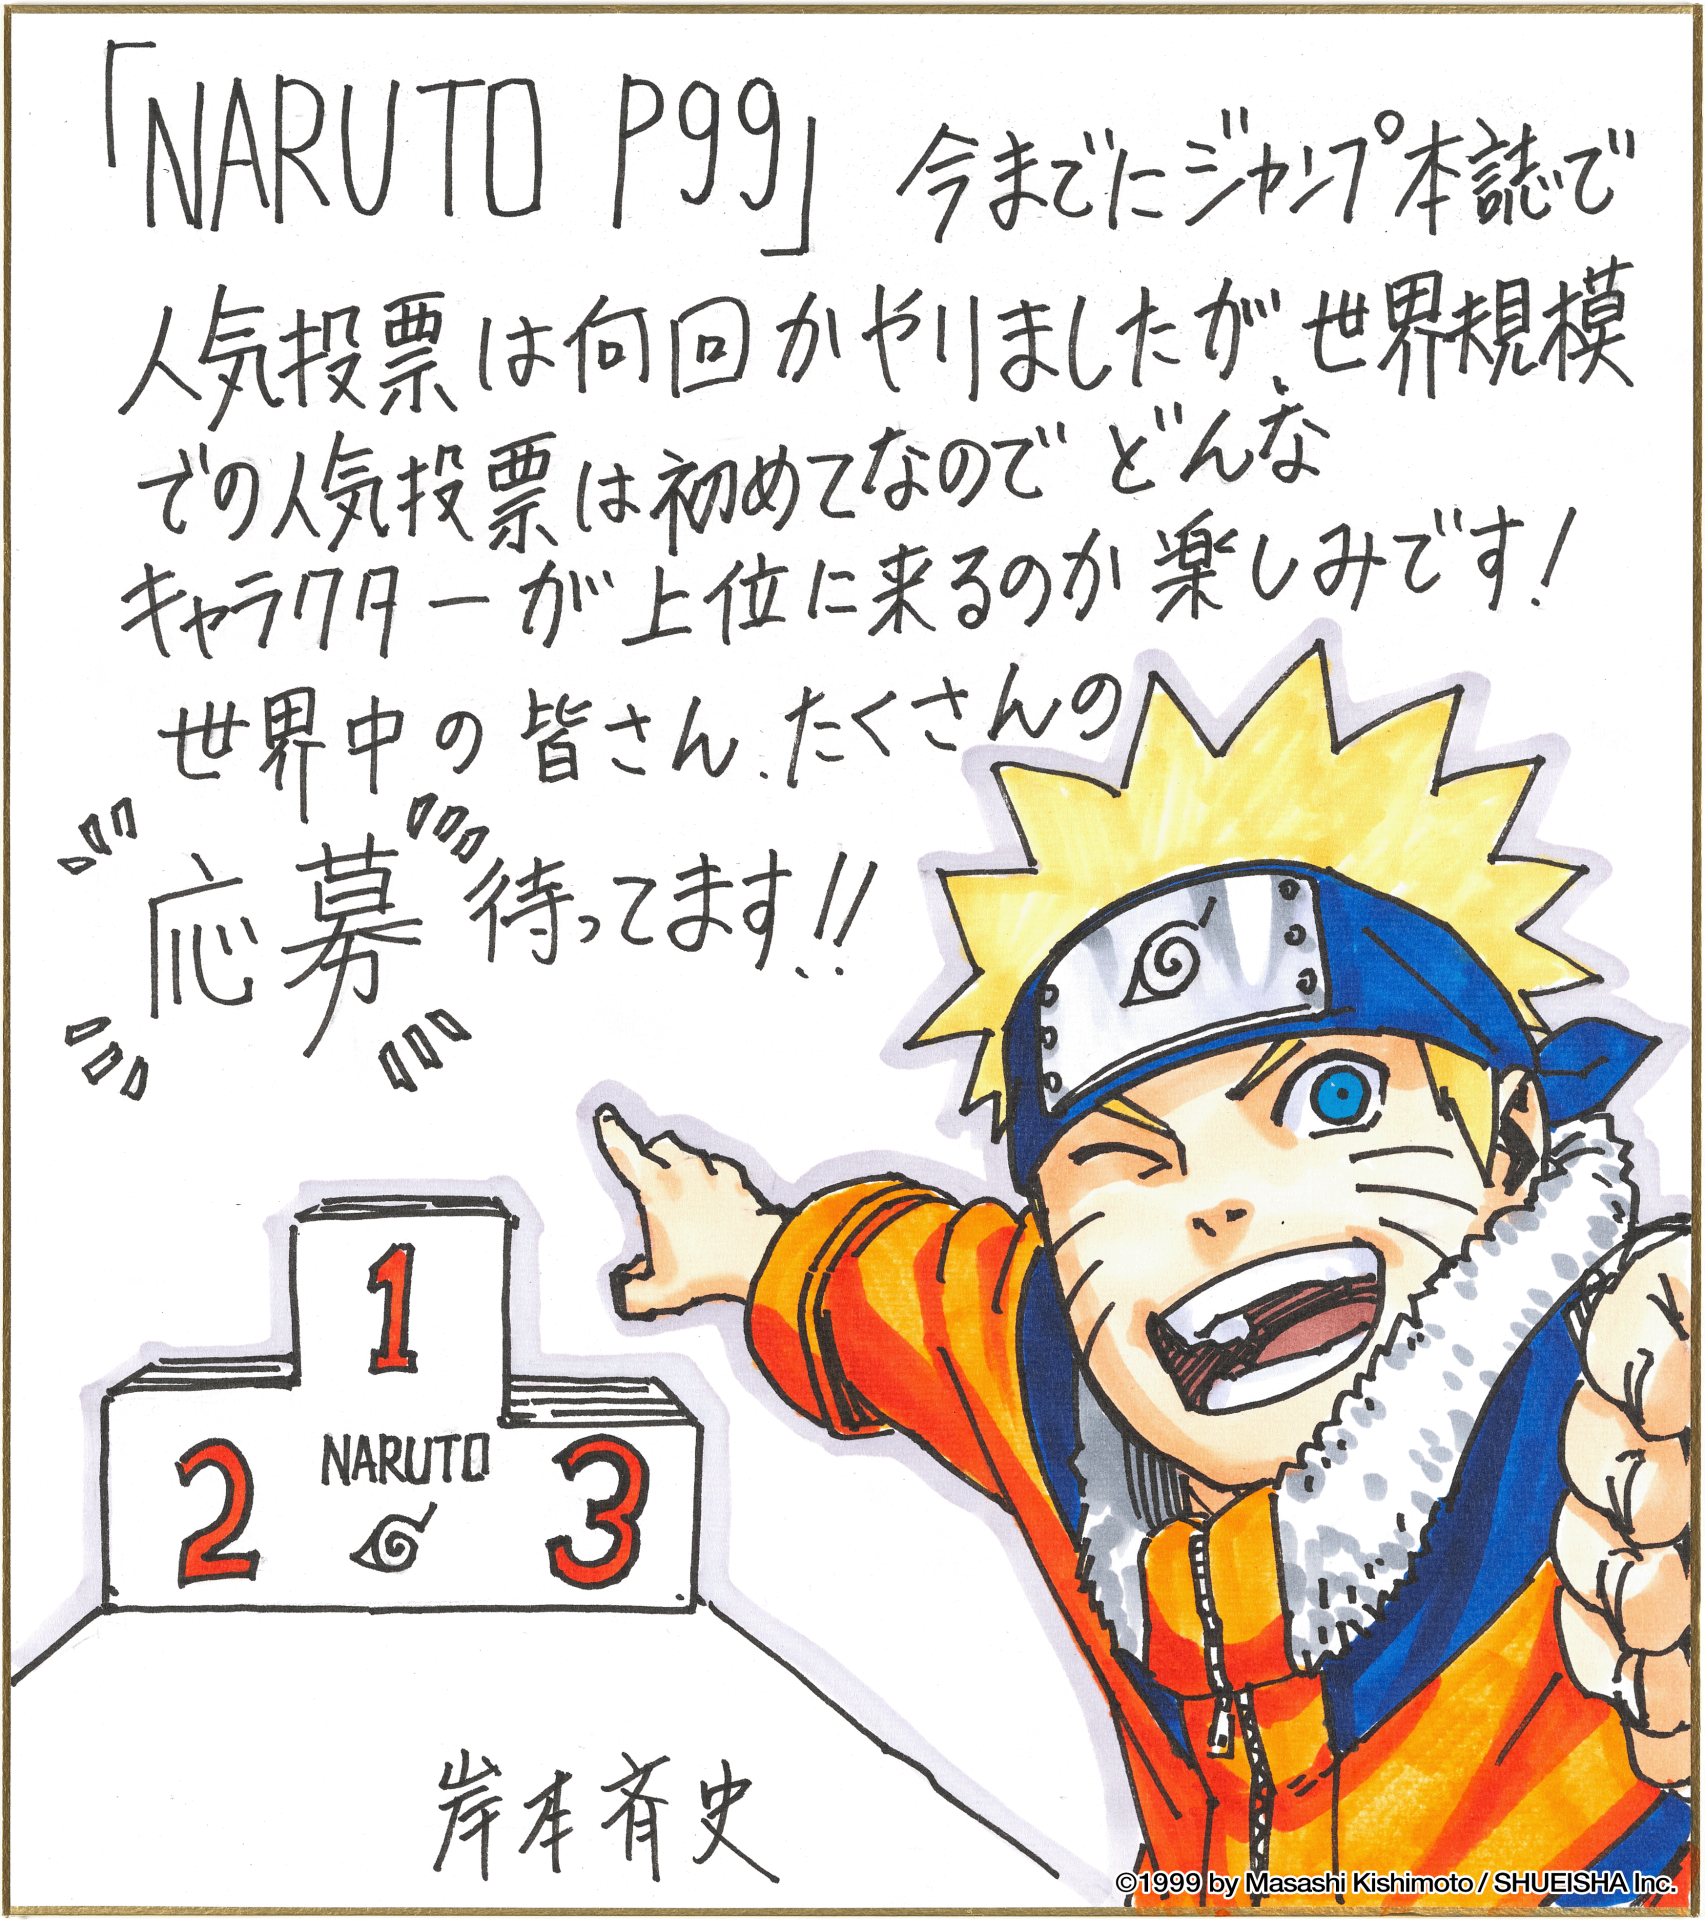 Naruto creator to release highly anticipated Minato Namikaze manga